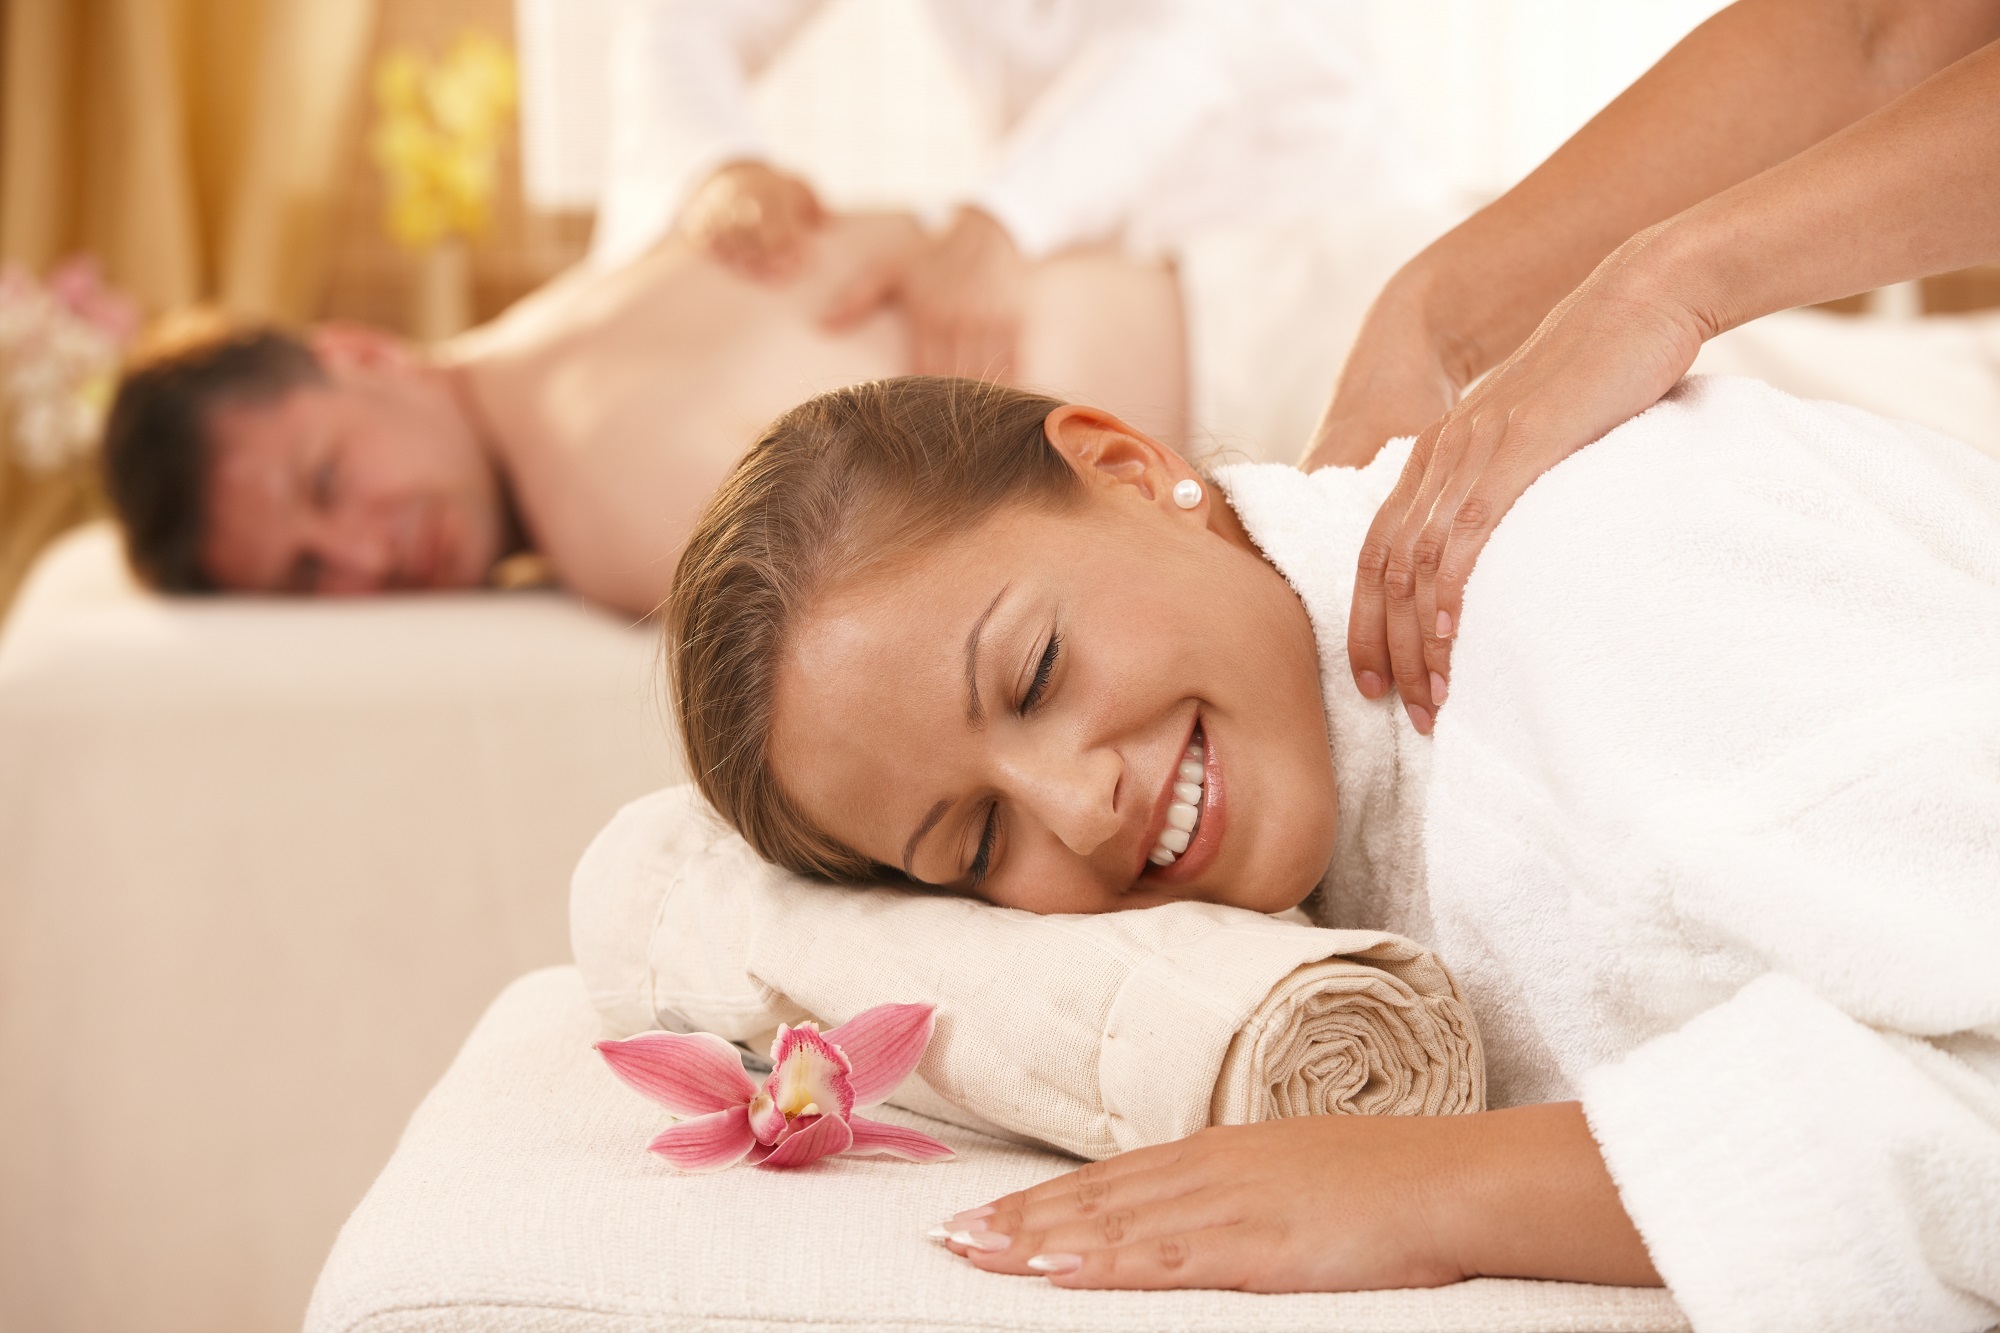 Detox And Rejuvenate Through Massage